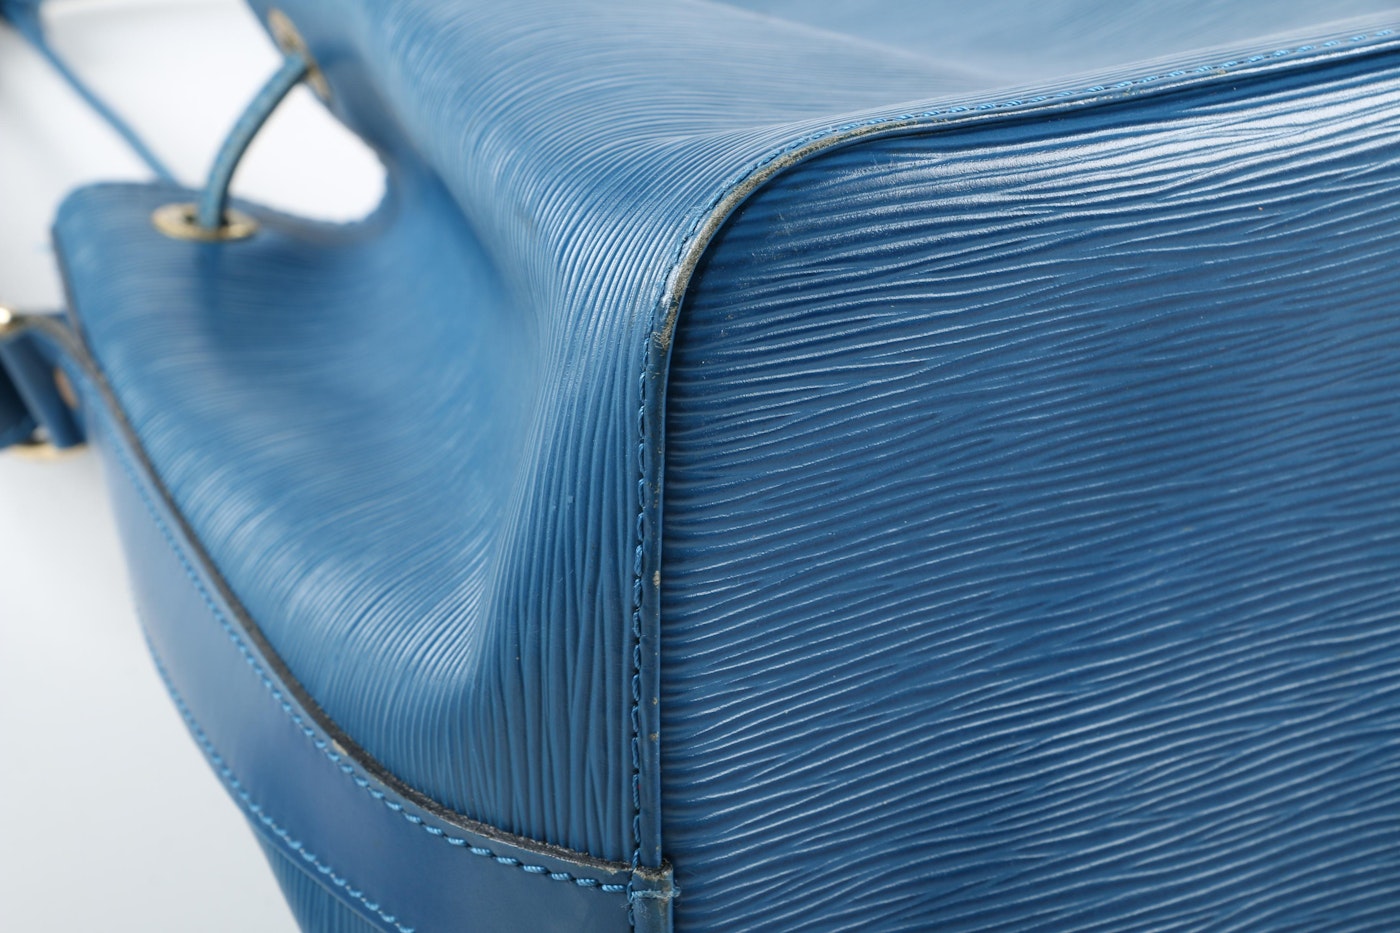 Louis Vuitton Petite Noé in Toledo Blue Epi Leather | EBTH